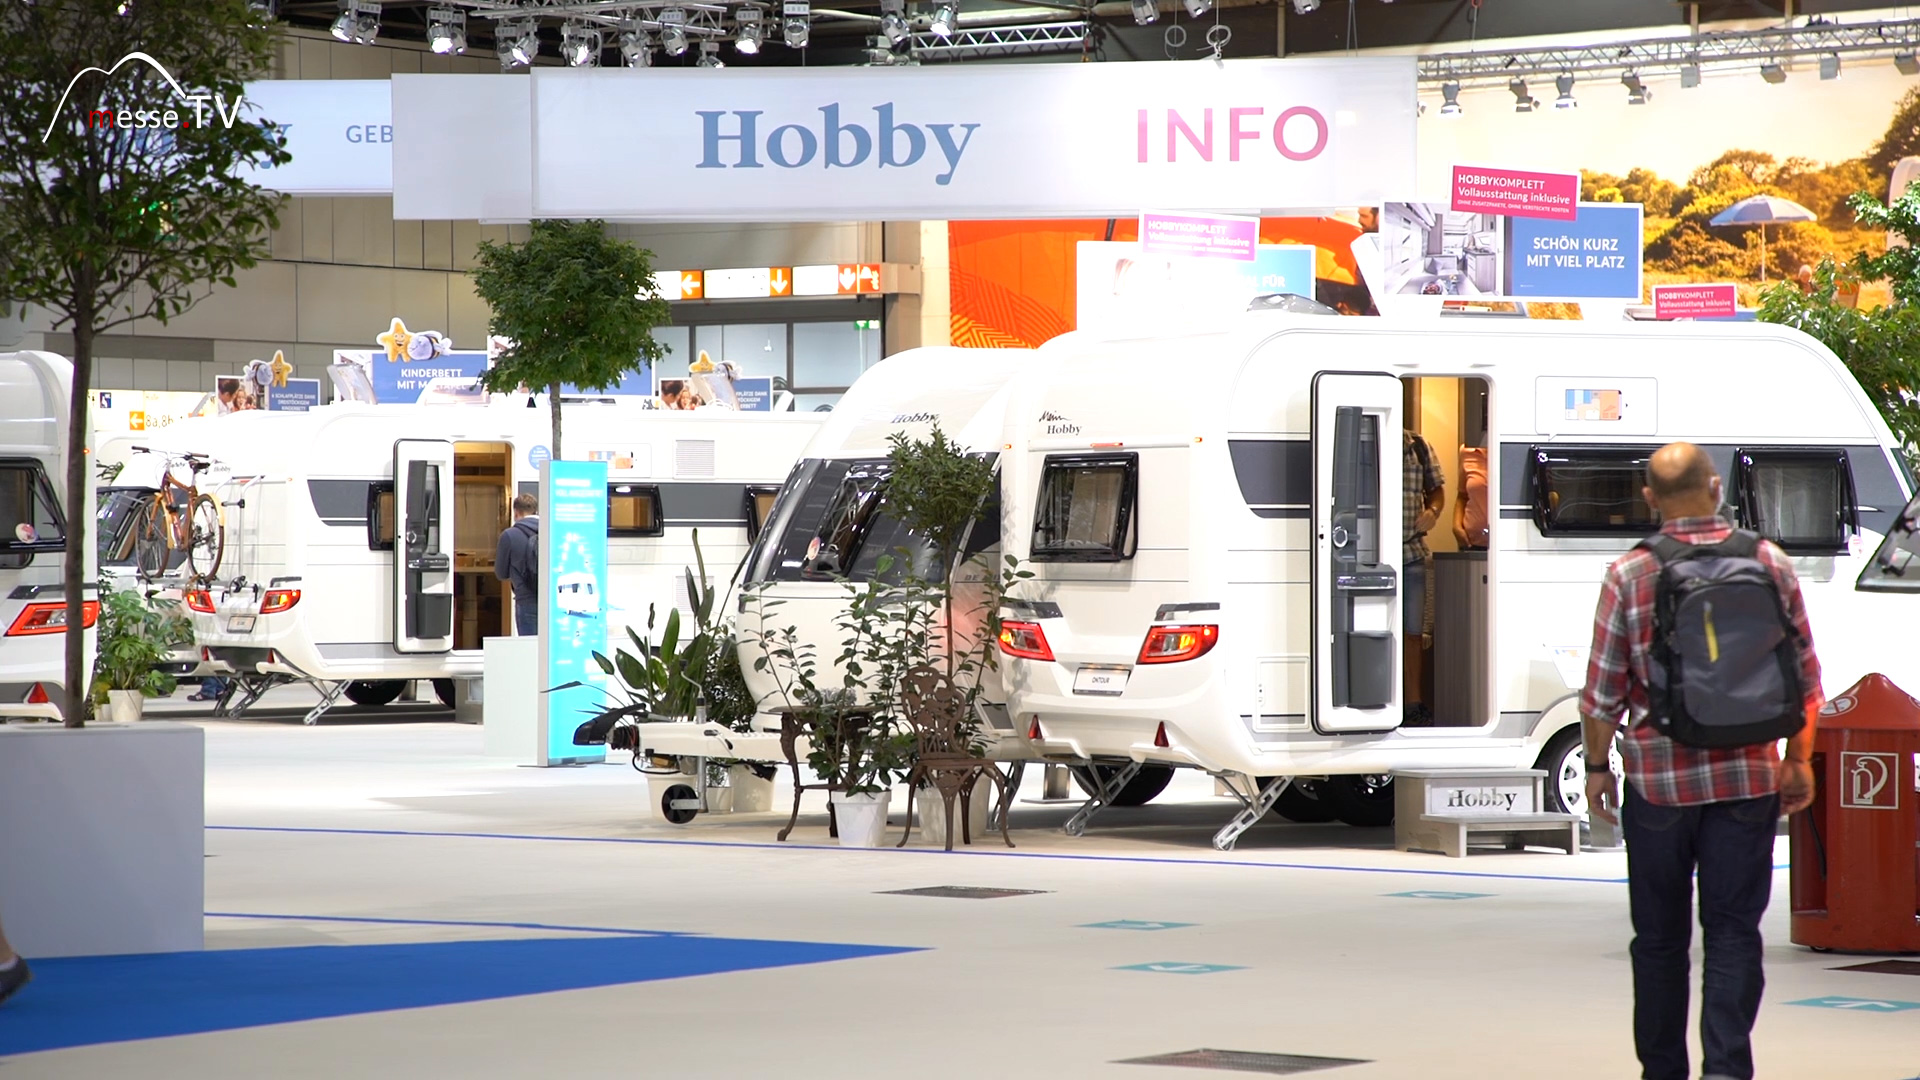 MesseTV report Hobby caravan alcove 2020 Dusseldorf